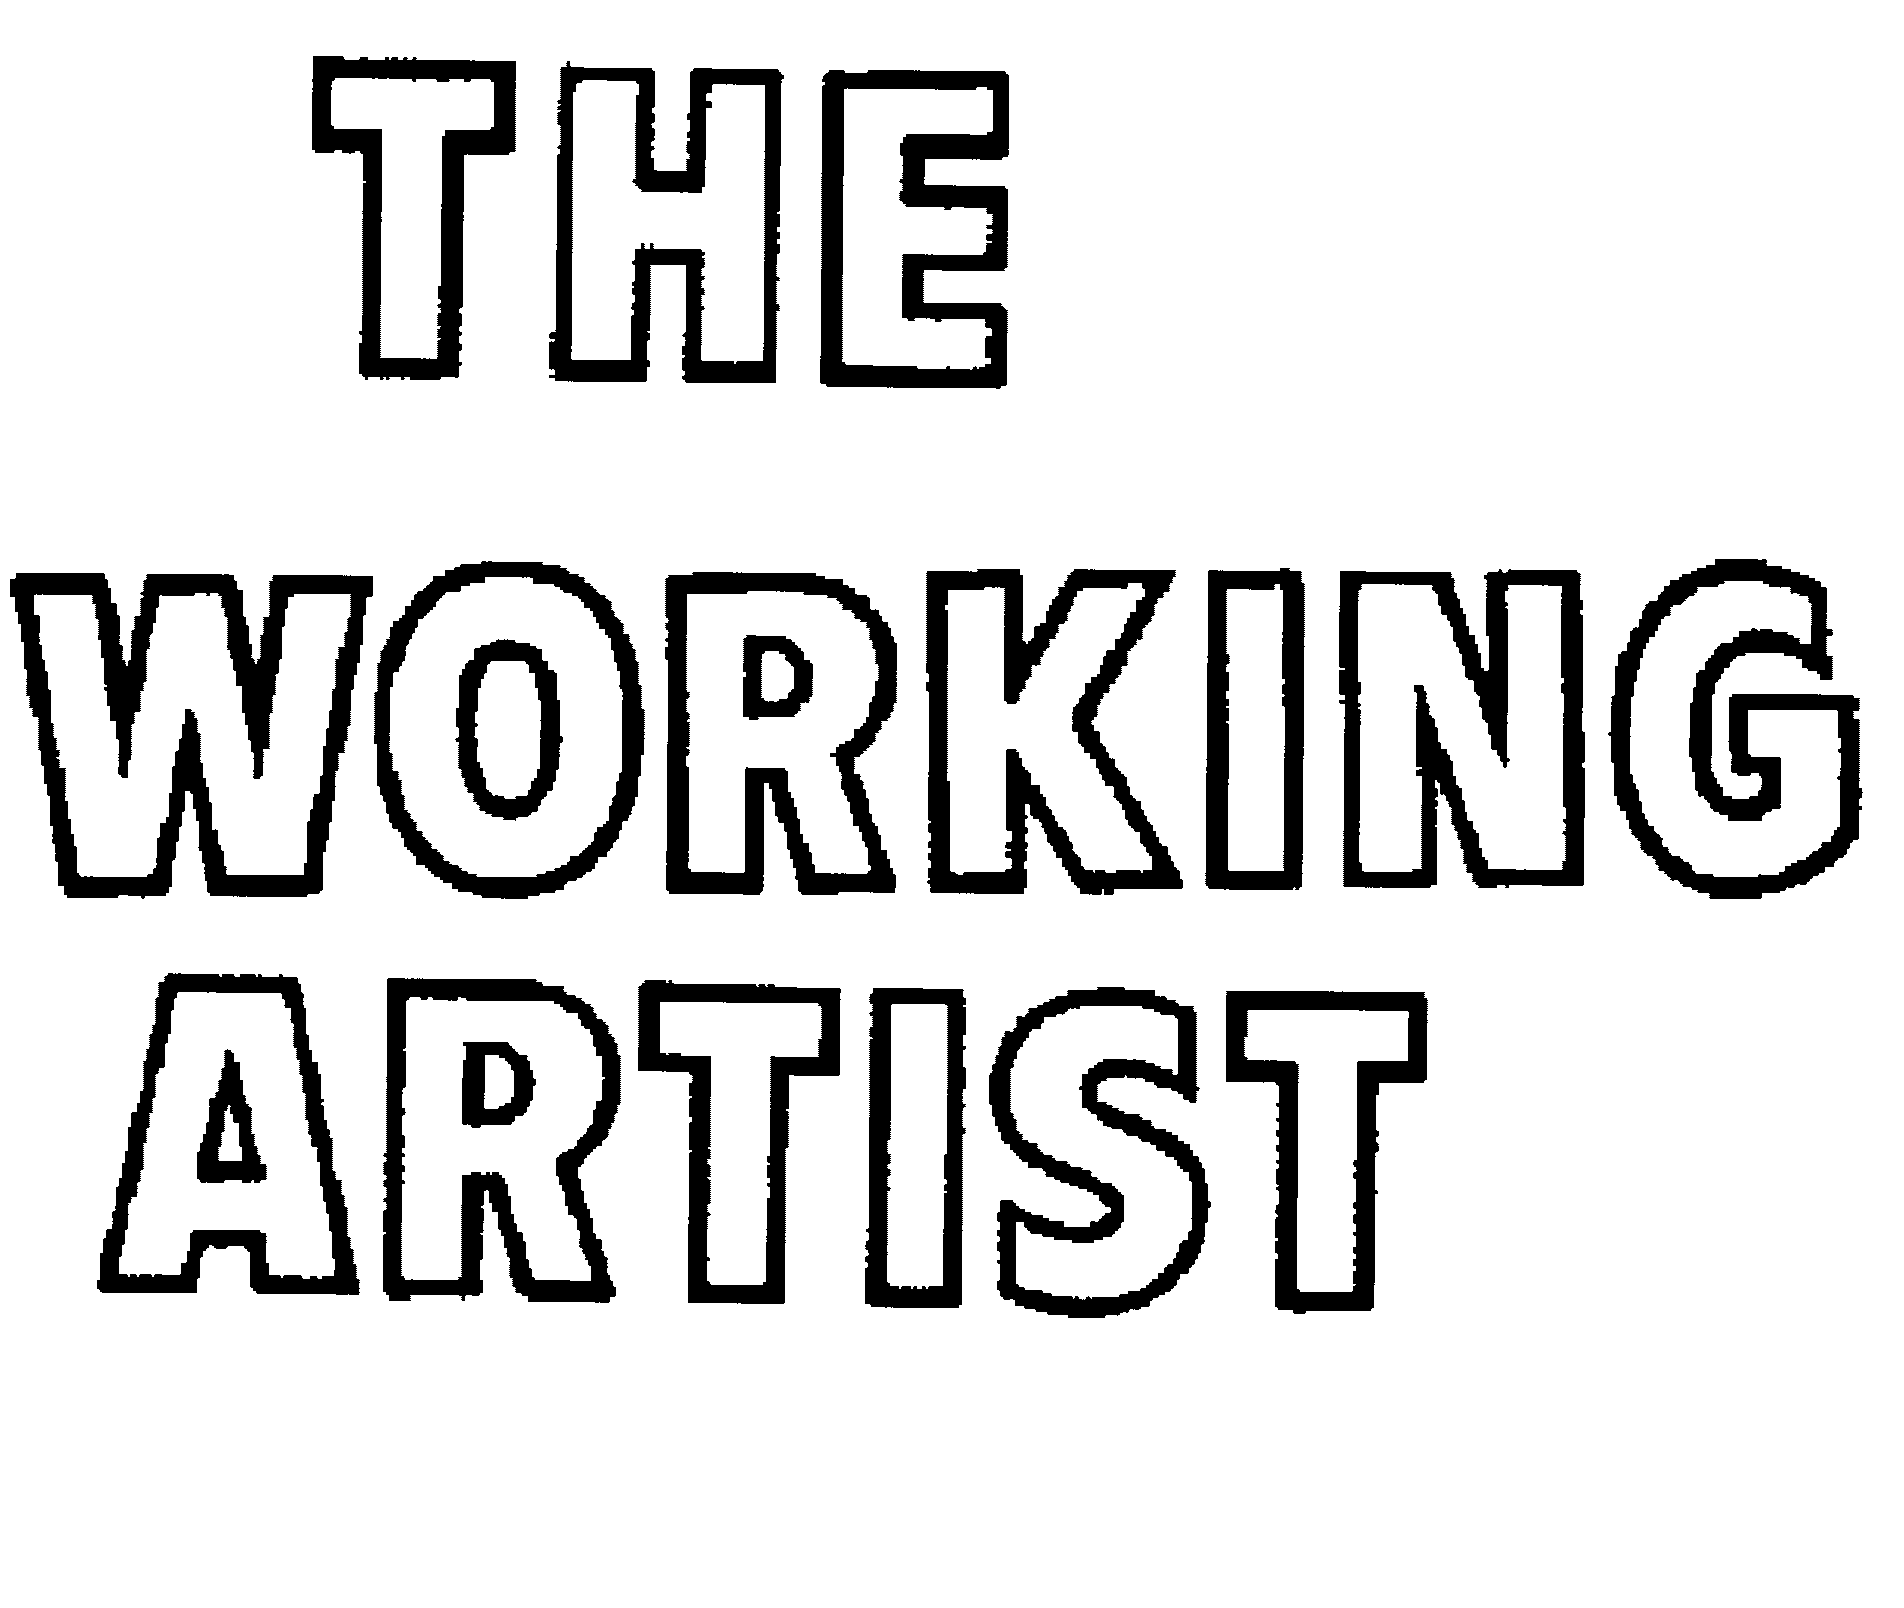 THE WORKING ARTIST